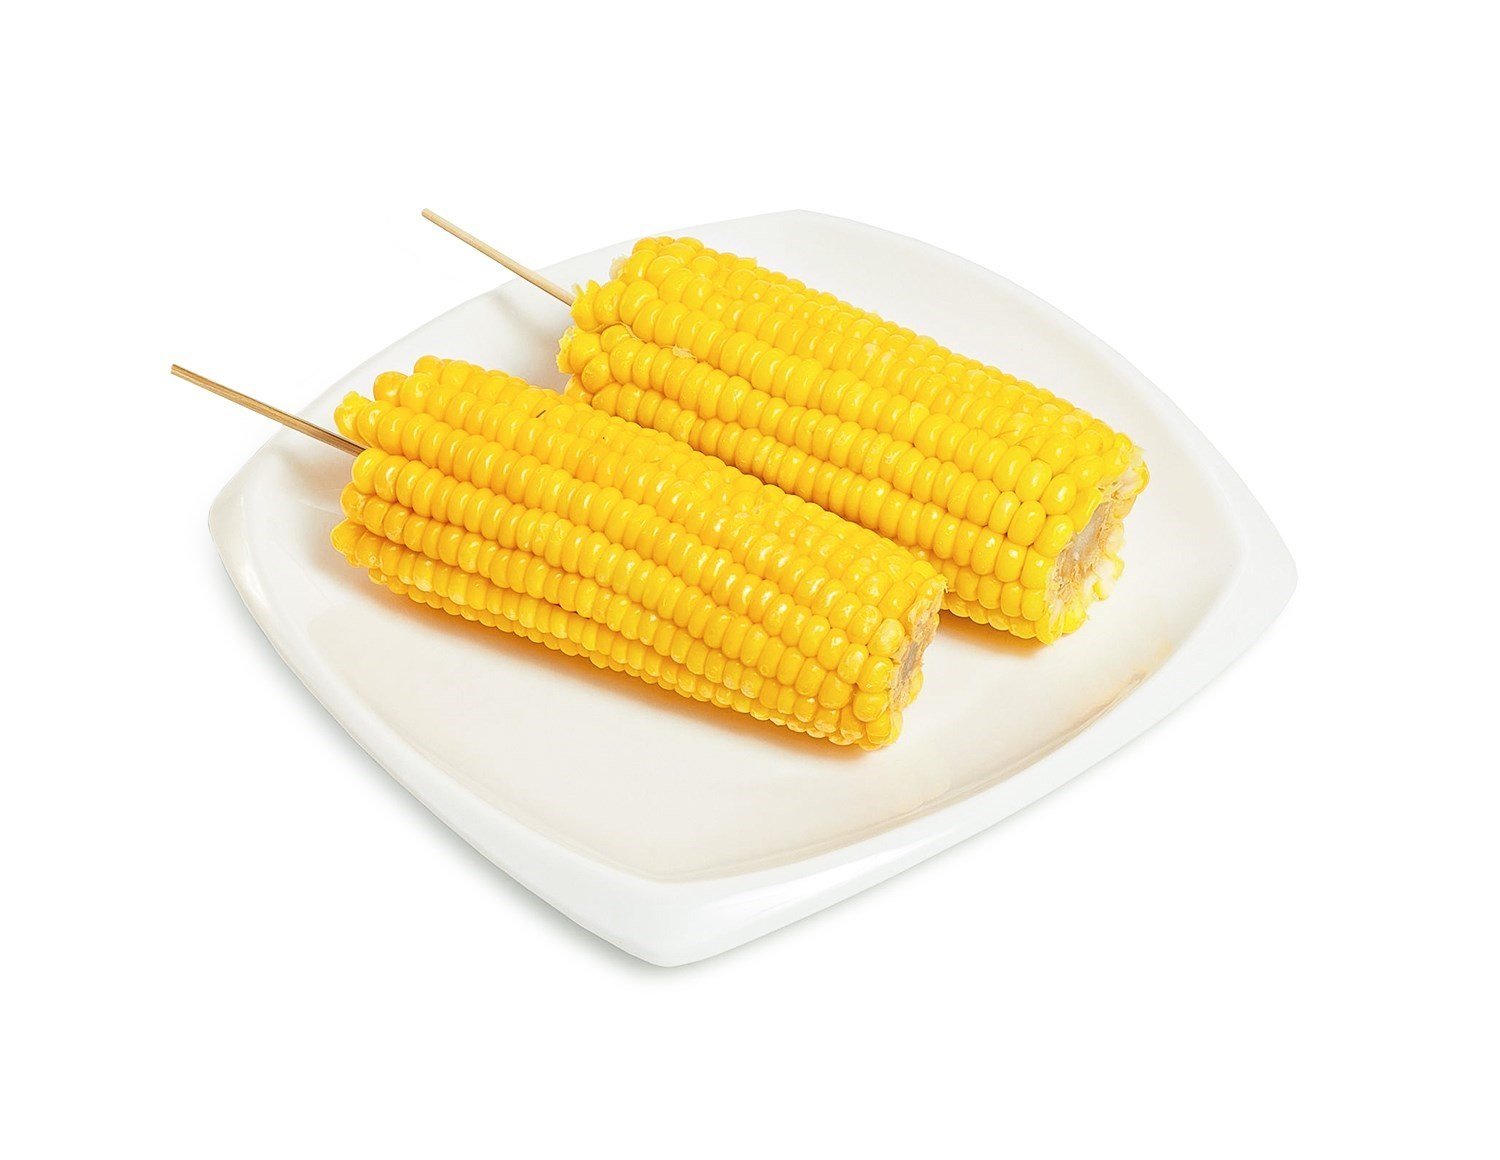 Corn note. Кукуруза початок. Вареная кукуруза. Кукуруза отварная в початках. Сладкая вареная кукуруза.